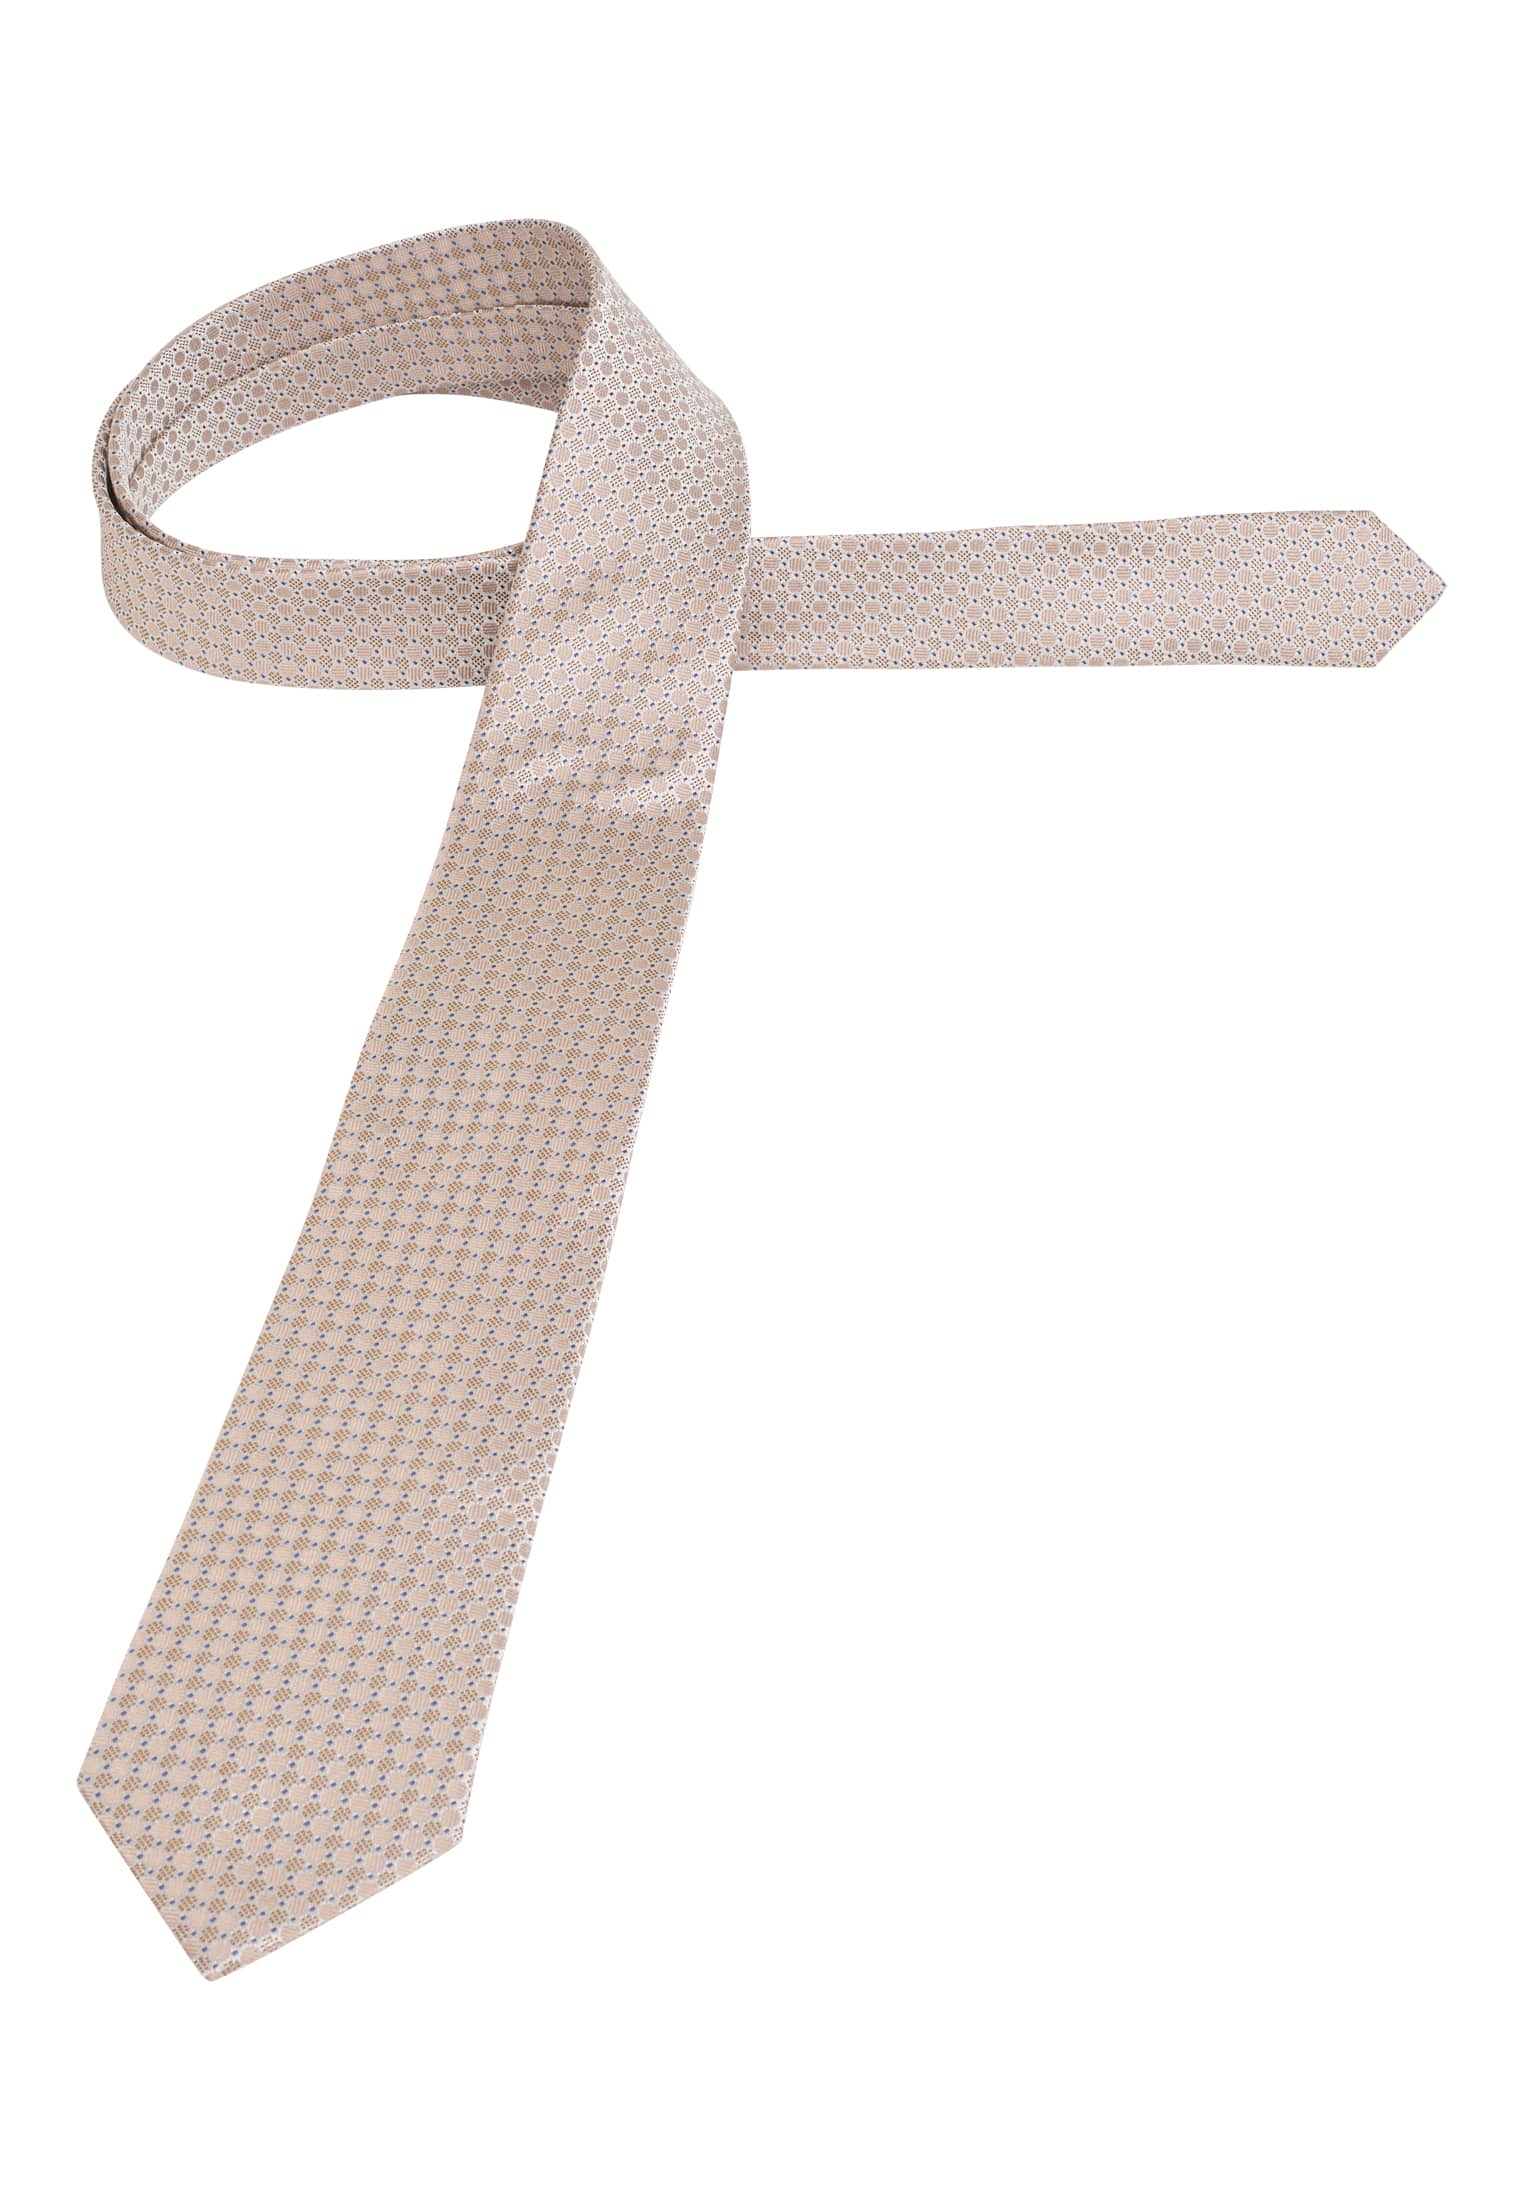 Krawatte in beige gemustert | 142 | | beige 1AC01968-02-01-142